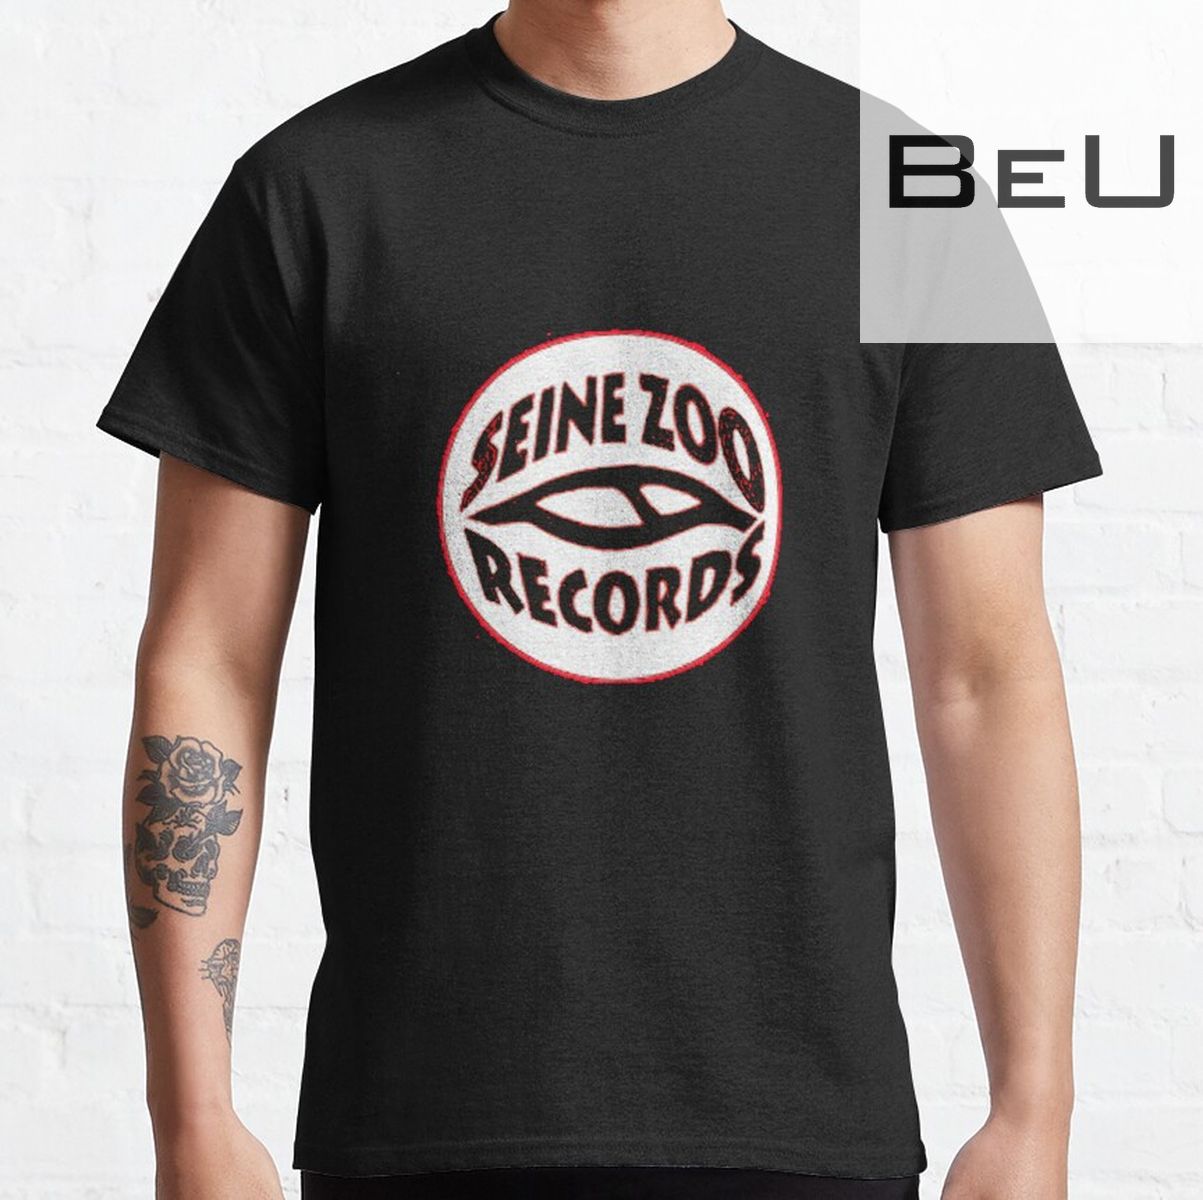 Seine Zoo Records T-shirt